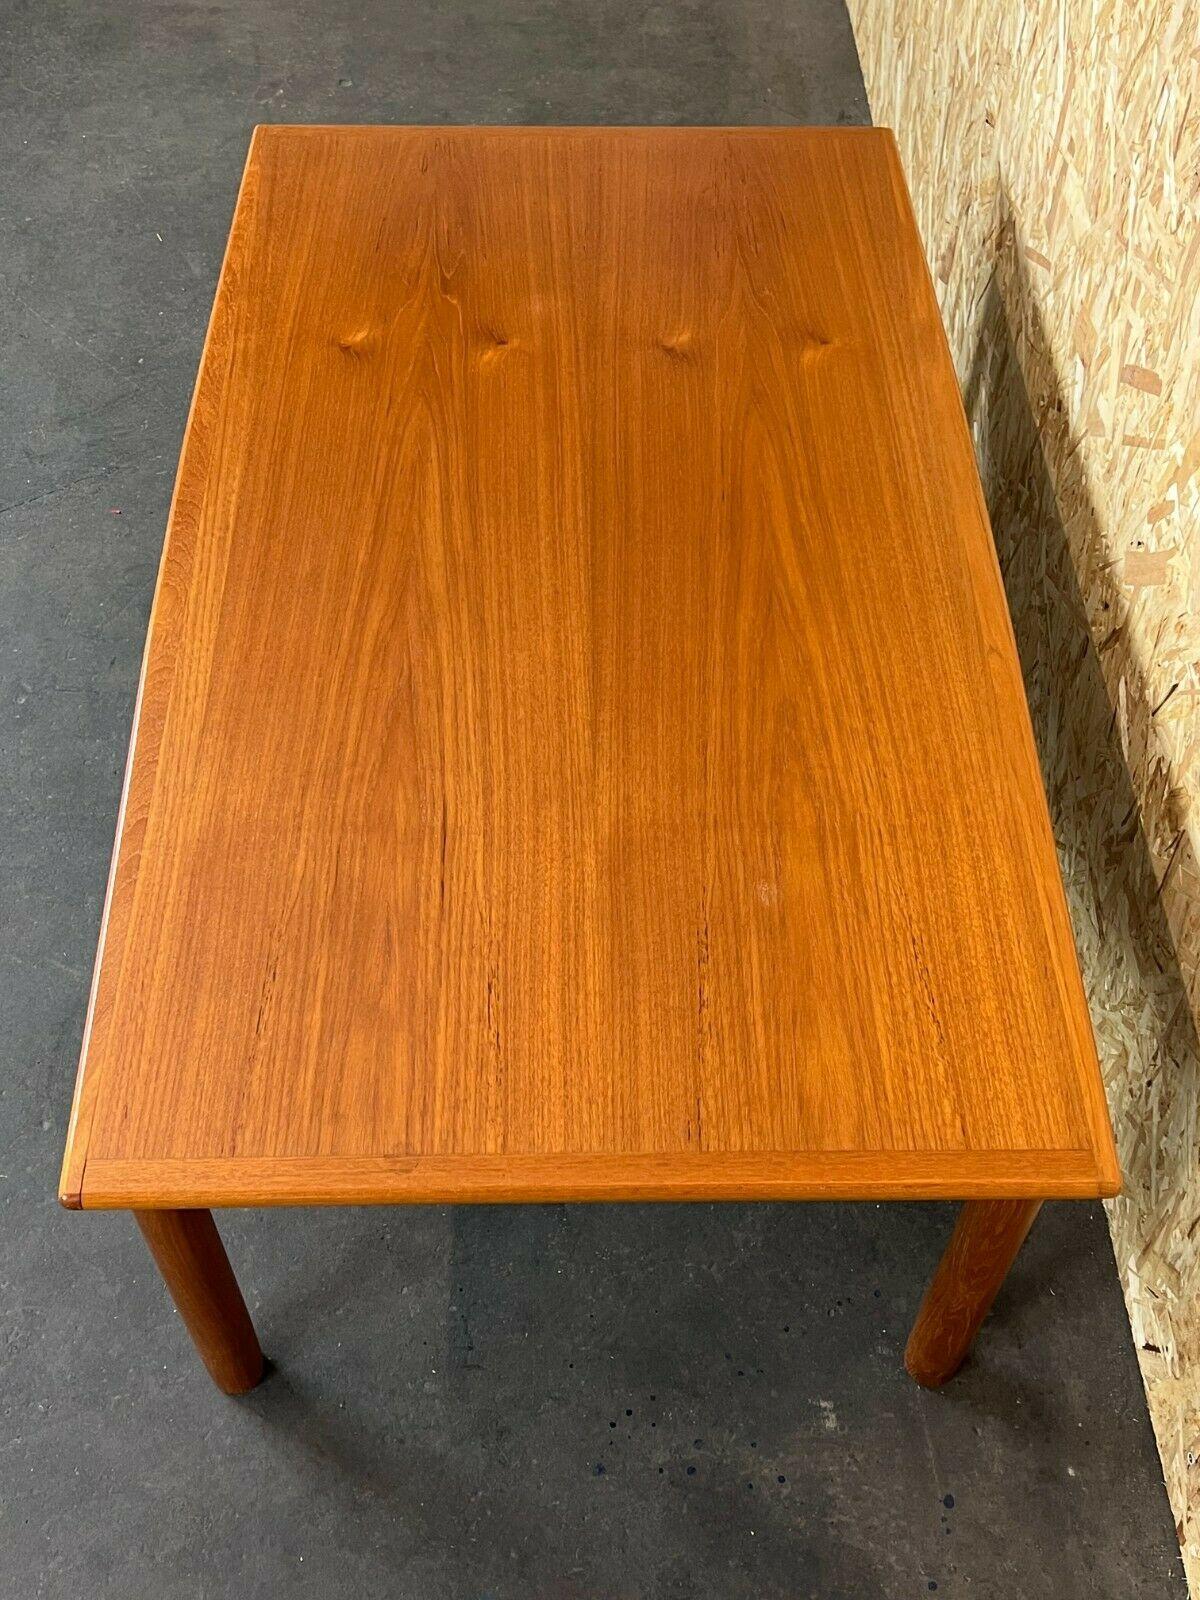 60s 70s Teak Table Coffee Table Danish Modern Design Denmark For Sale 4